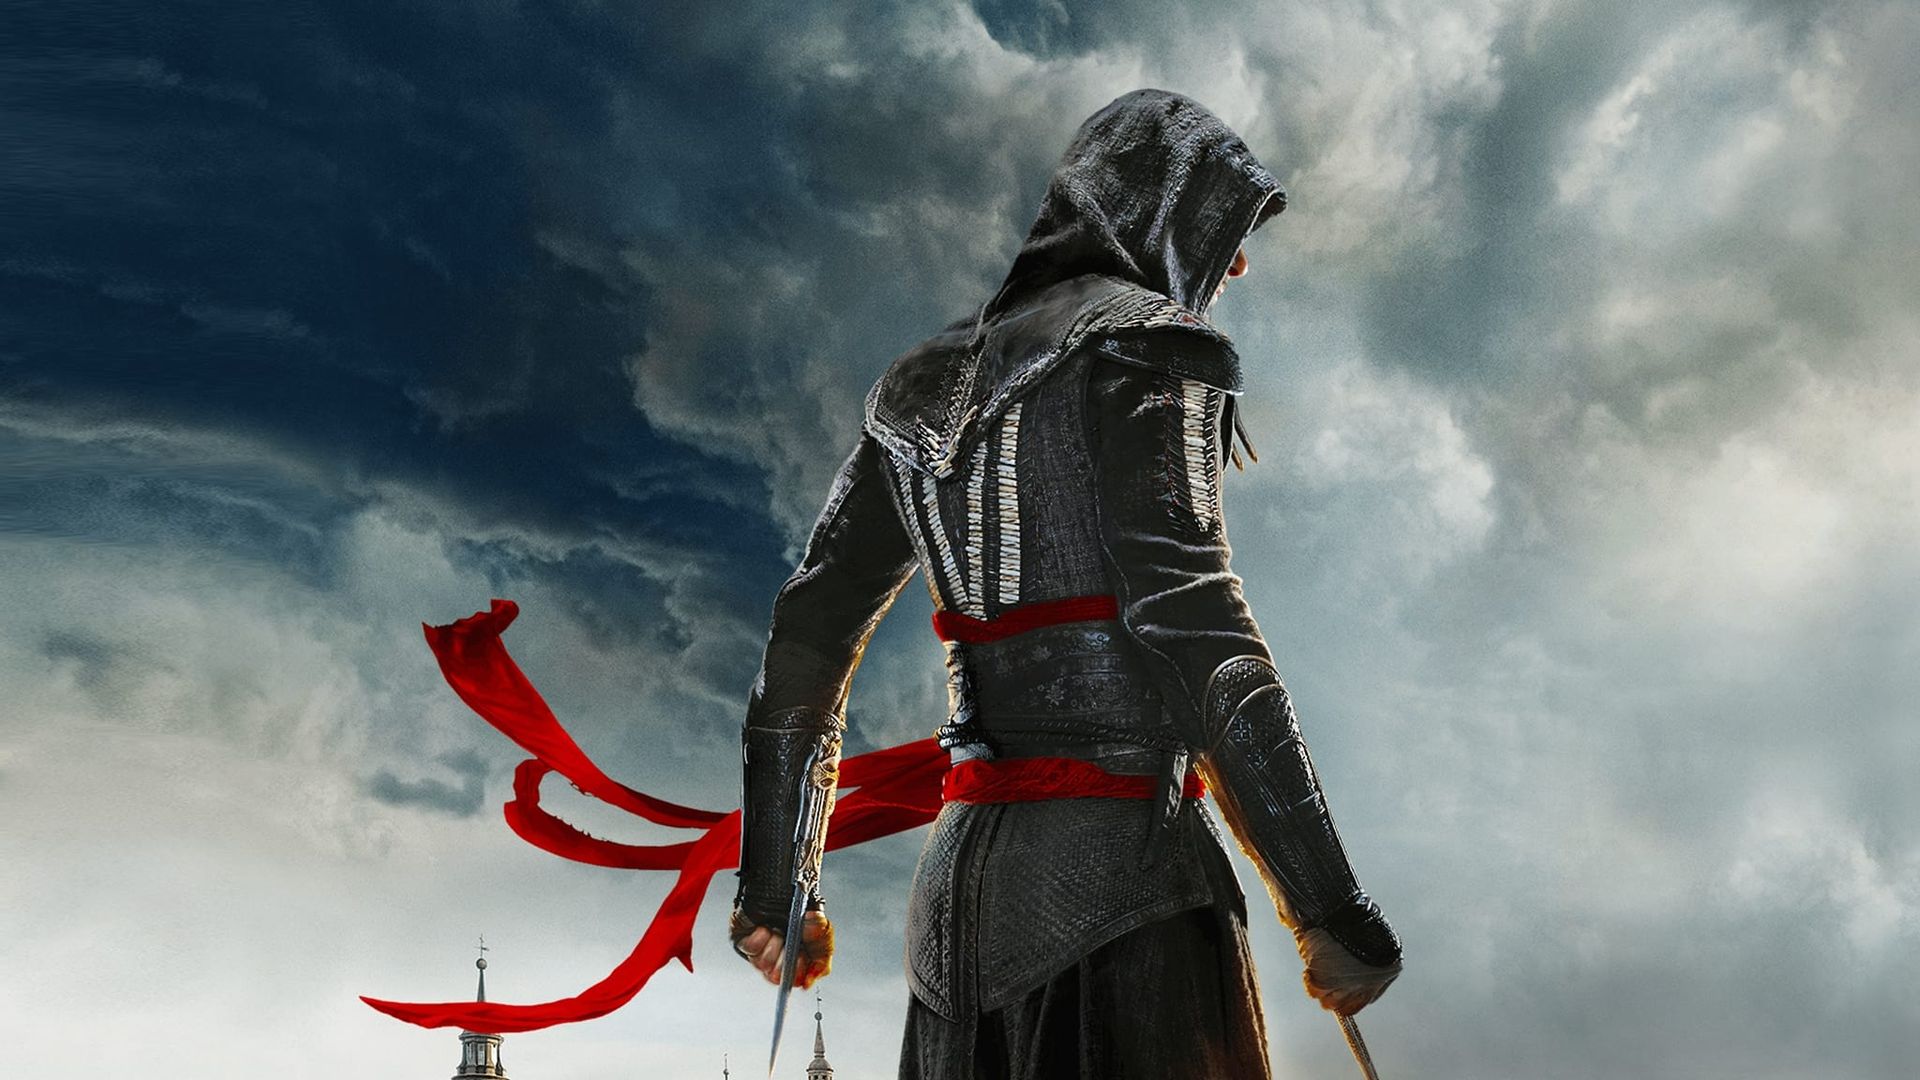 Assassin's Creed III (Video Game 2012) - IMDb